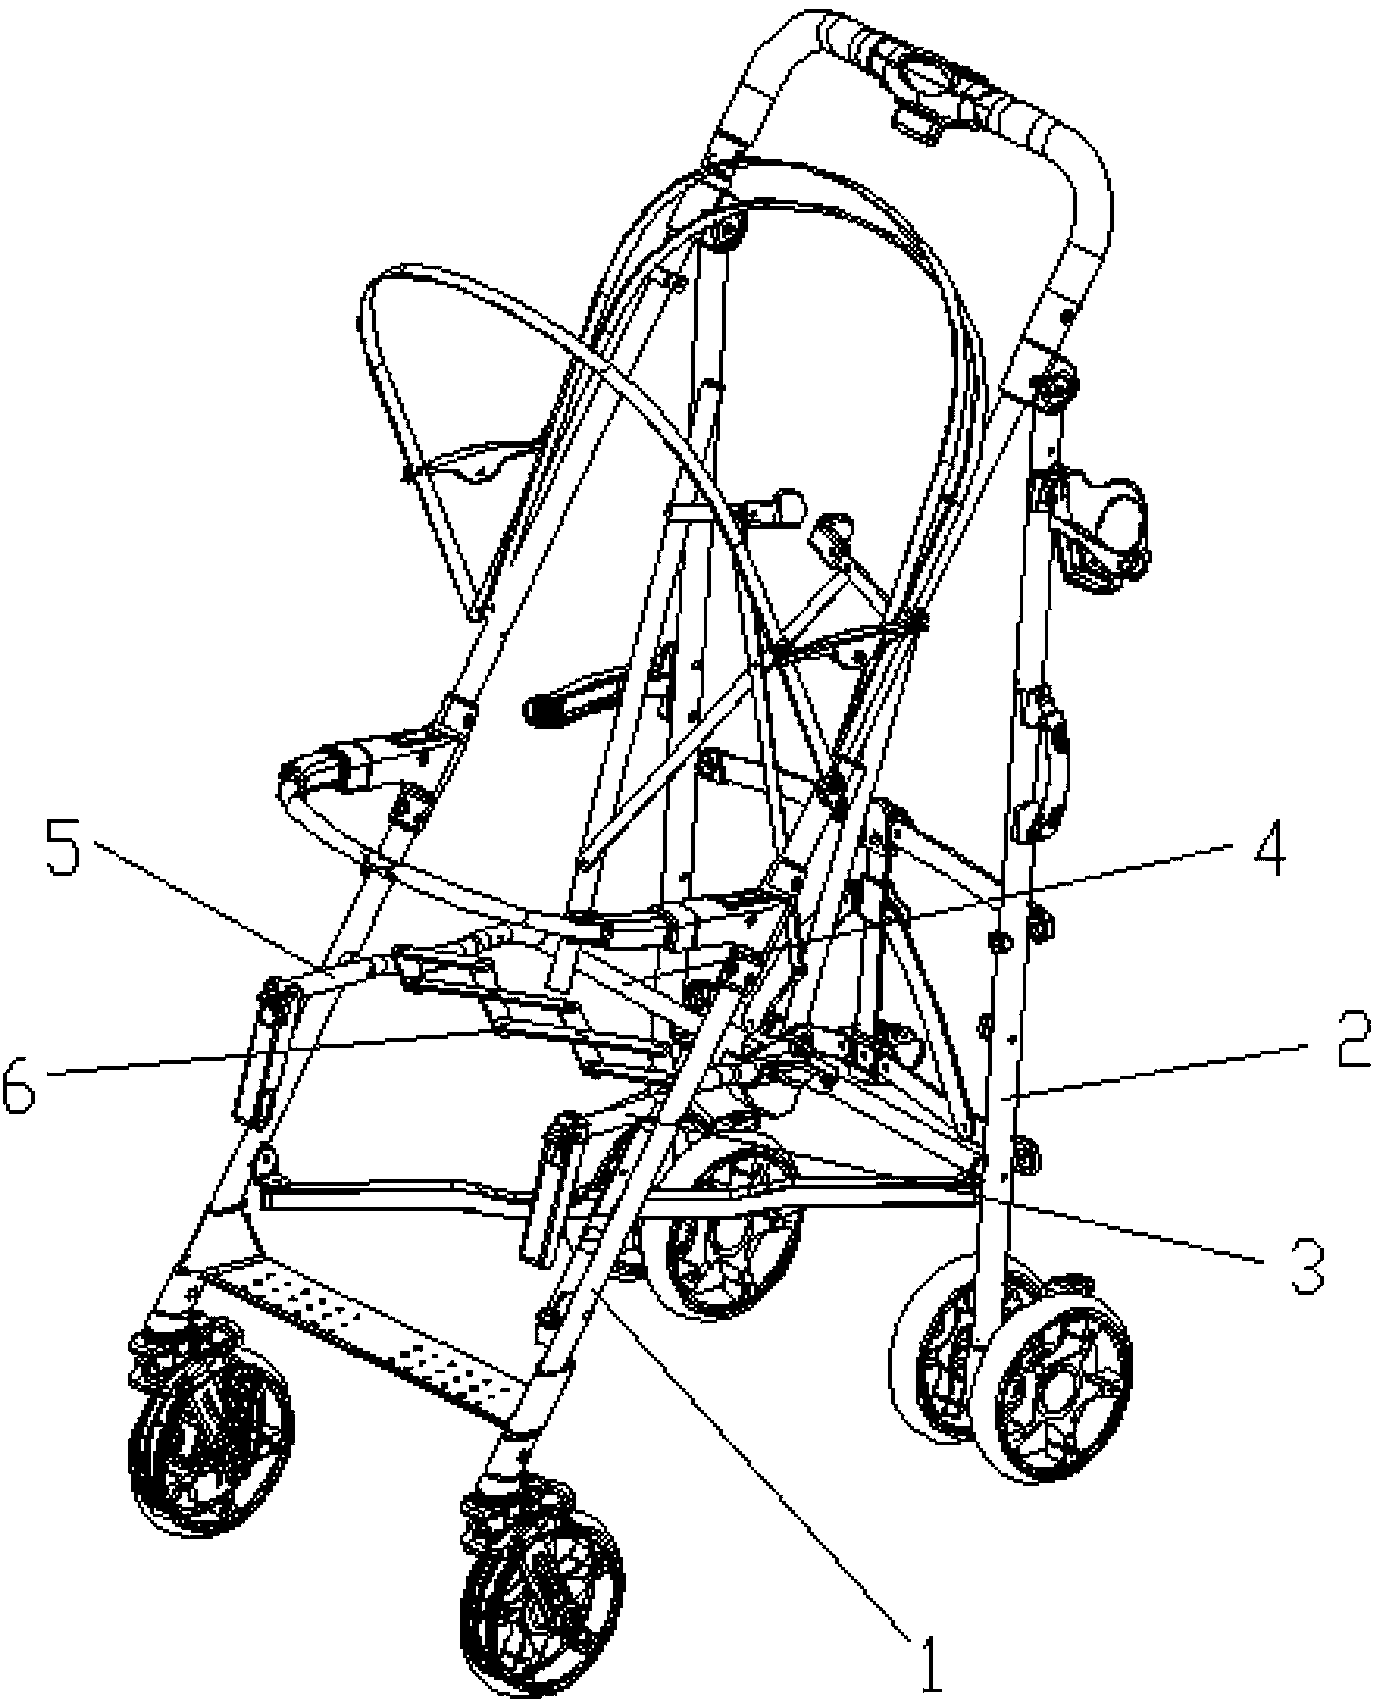 Hard cushion structure for child umbrella-stroller